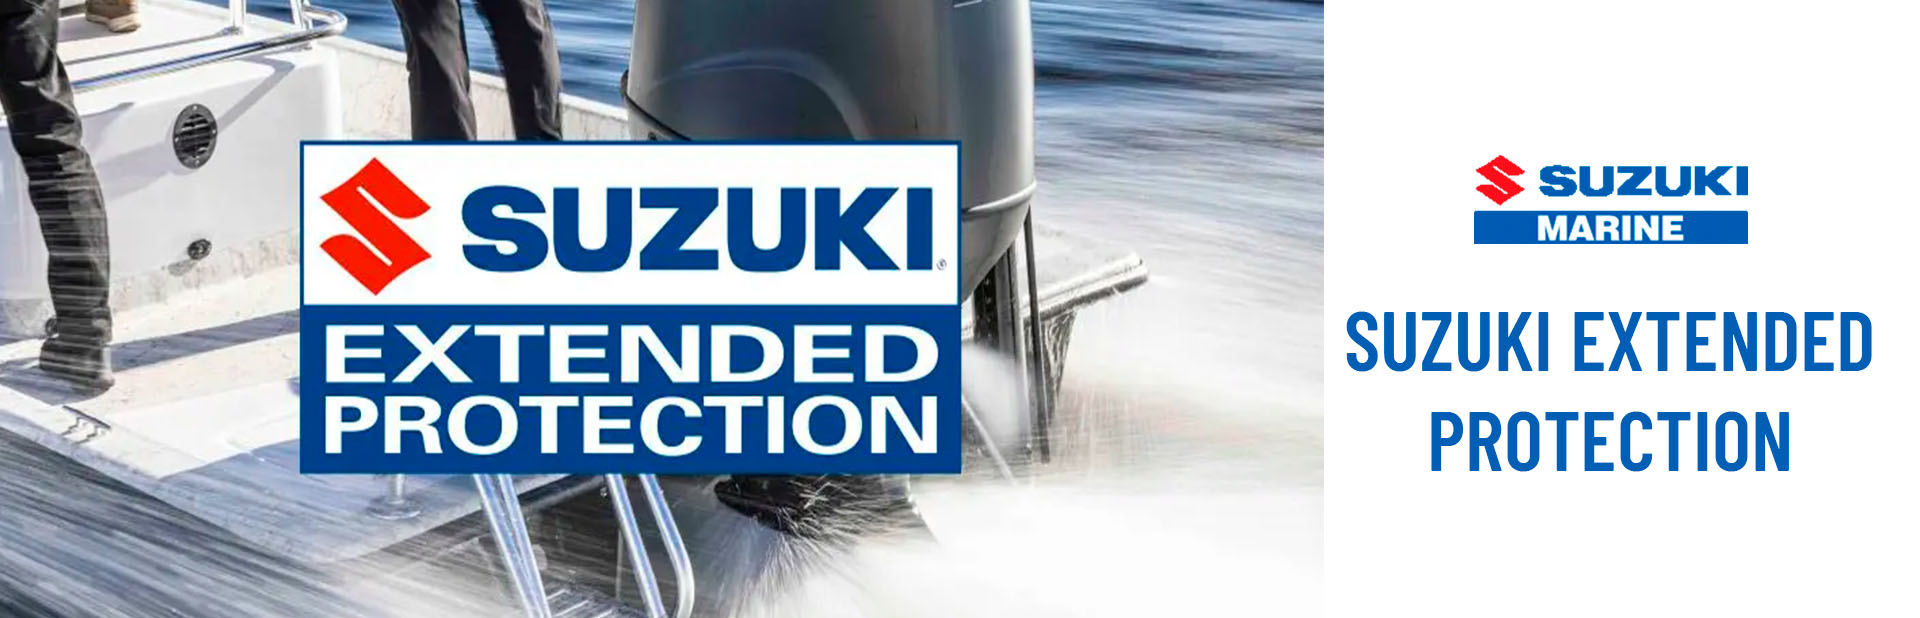 SUZUKI EXTENDED PROTECTION